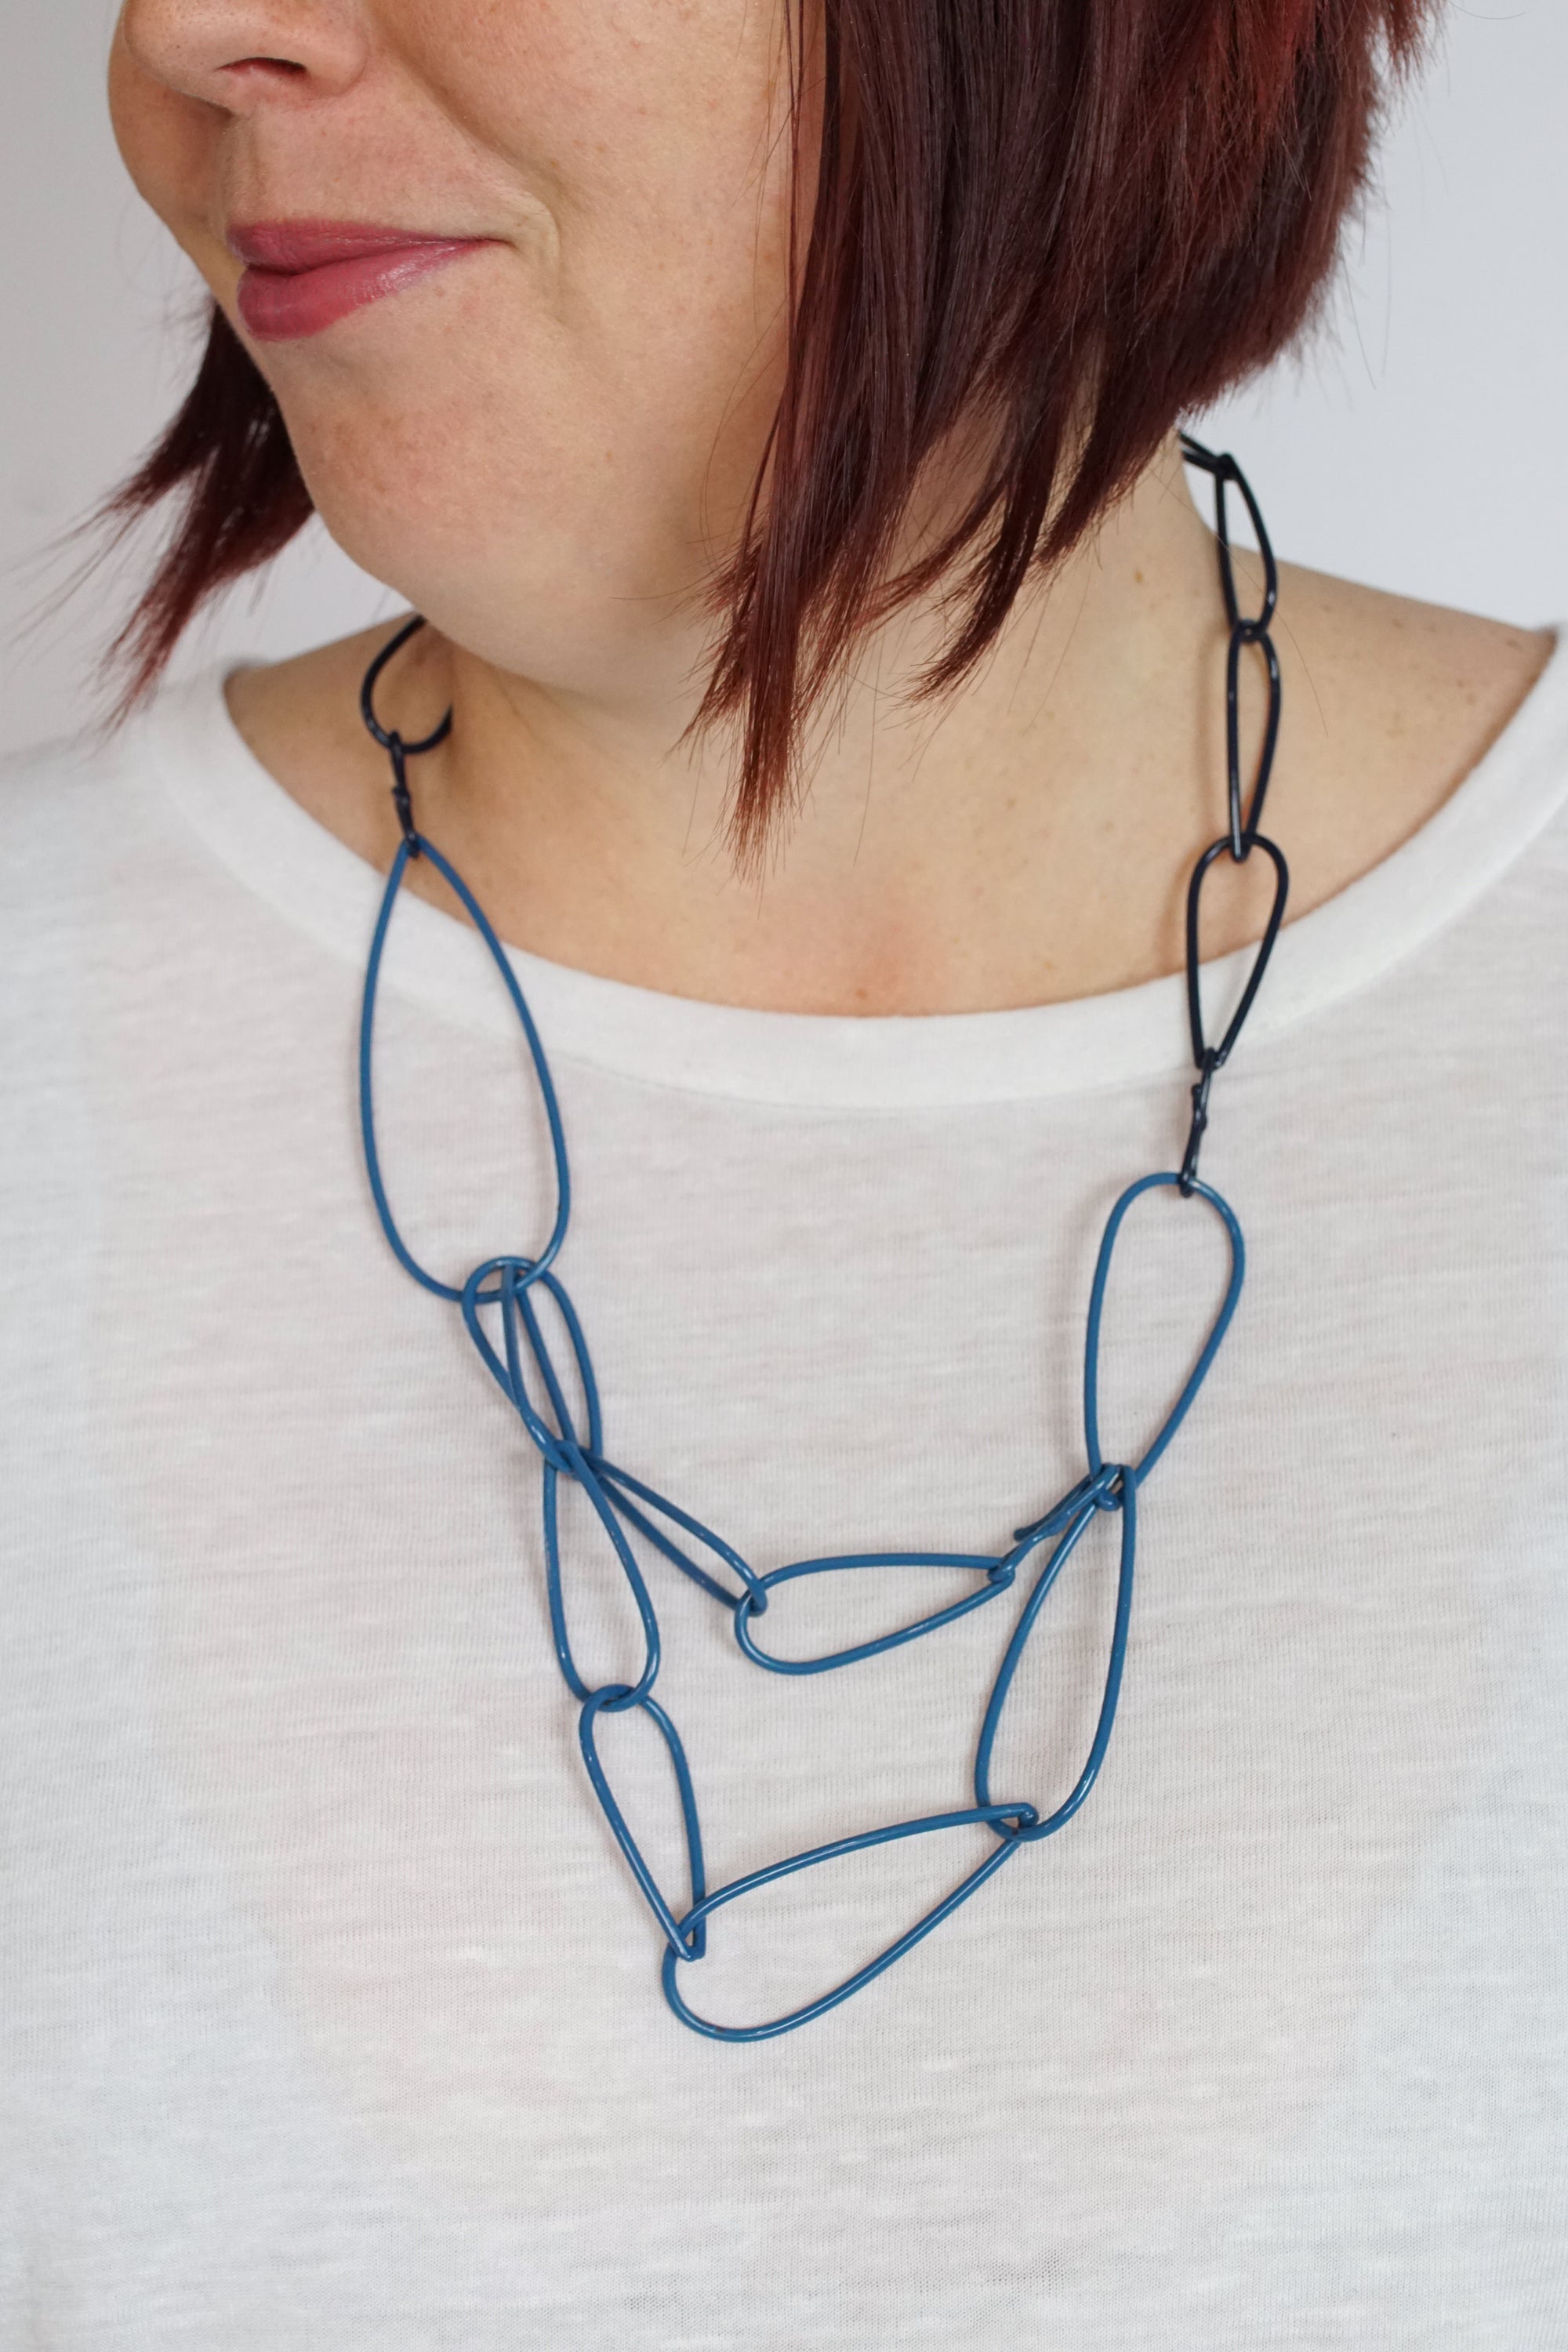 Modular Necklace in Azure Blue and Dark Navy